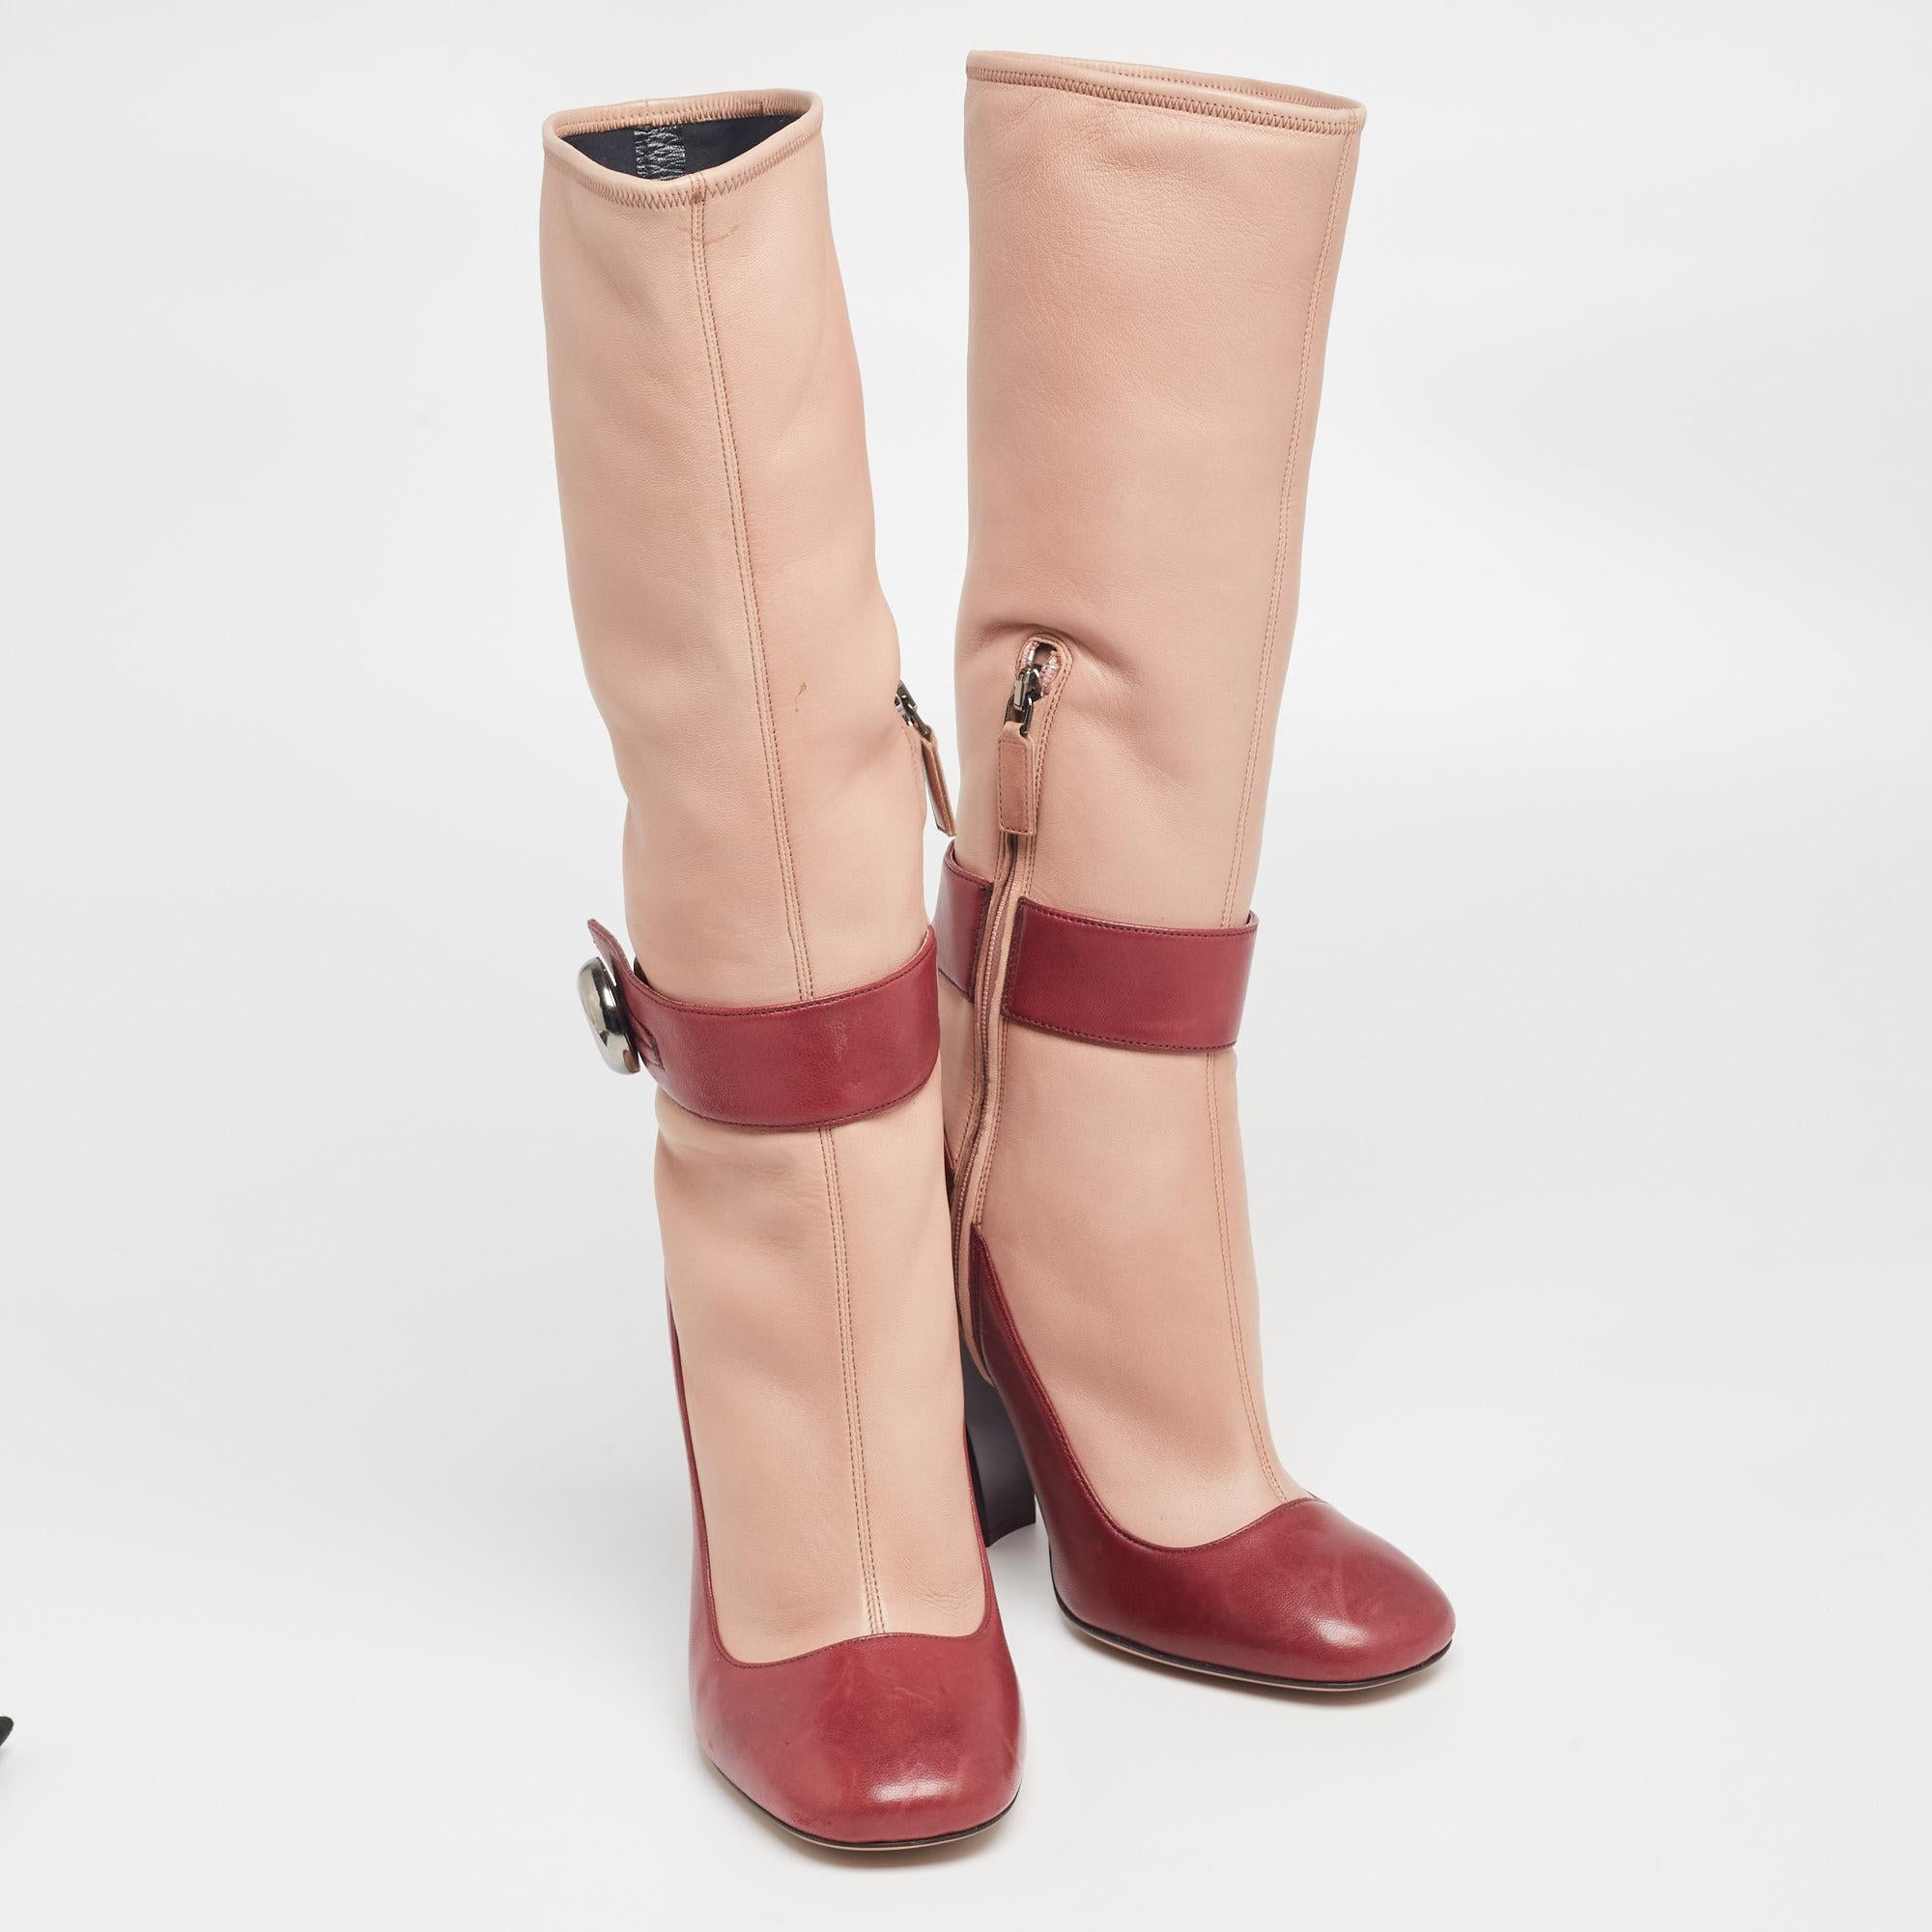 Prada Beige/Burgundy Leather Mid Calf Length Boots Size 39 4